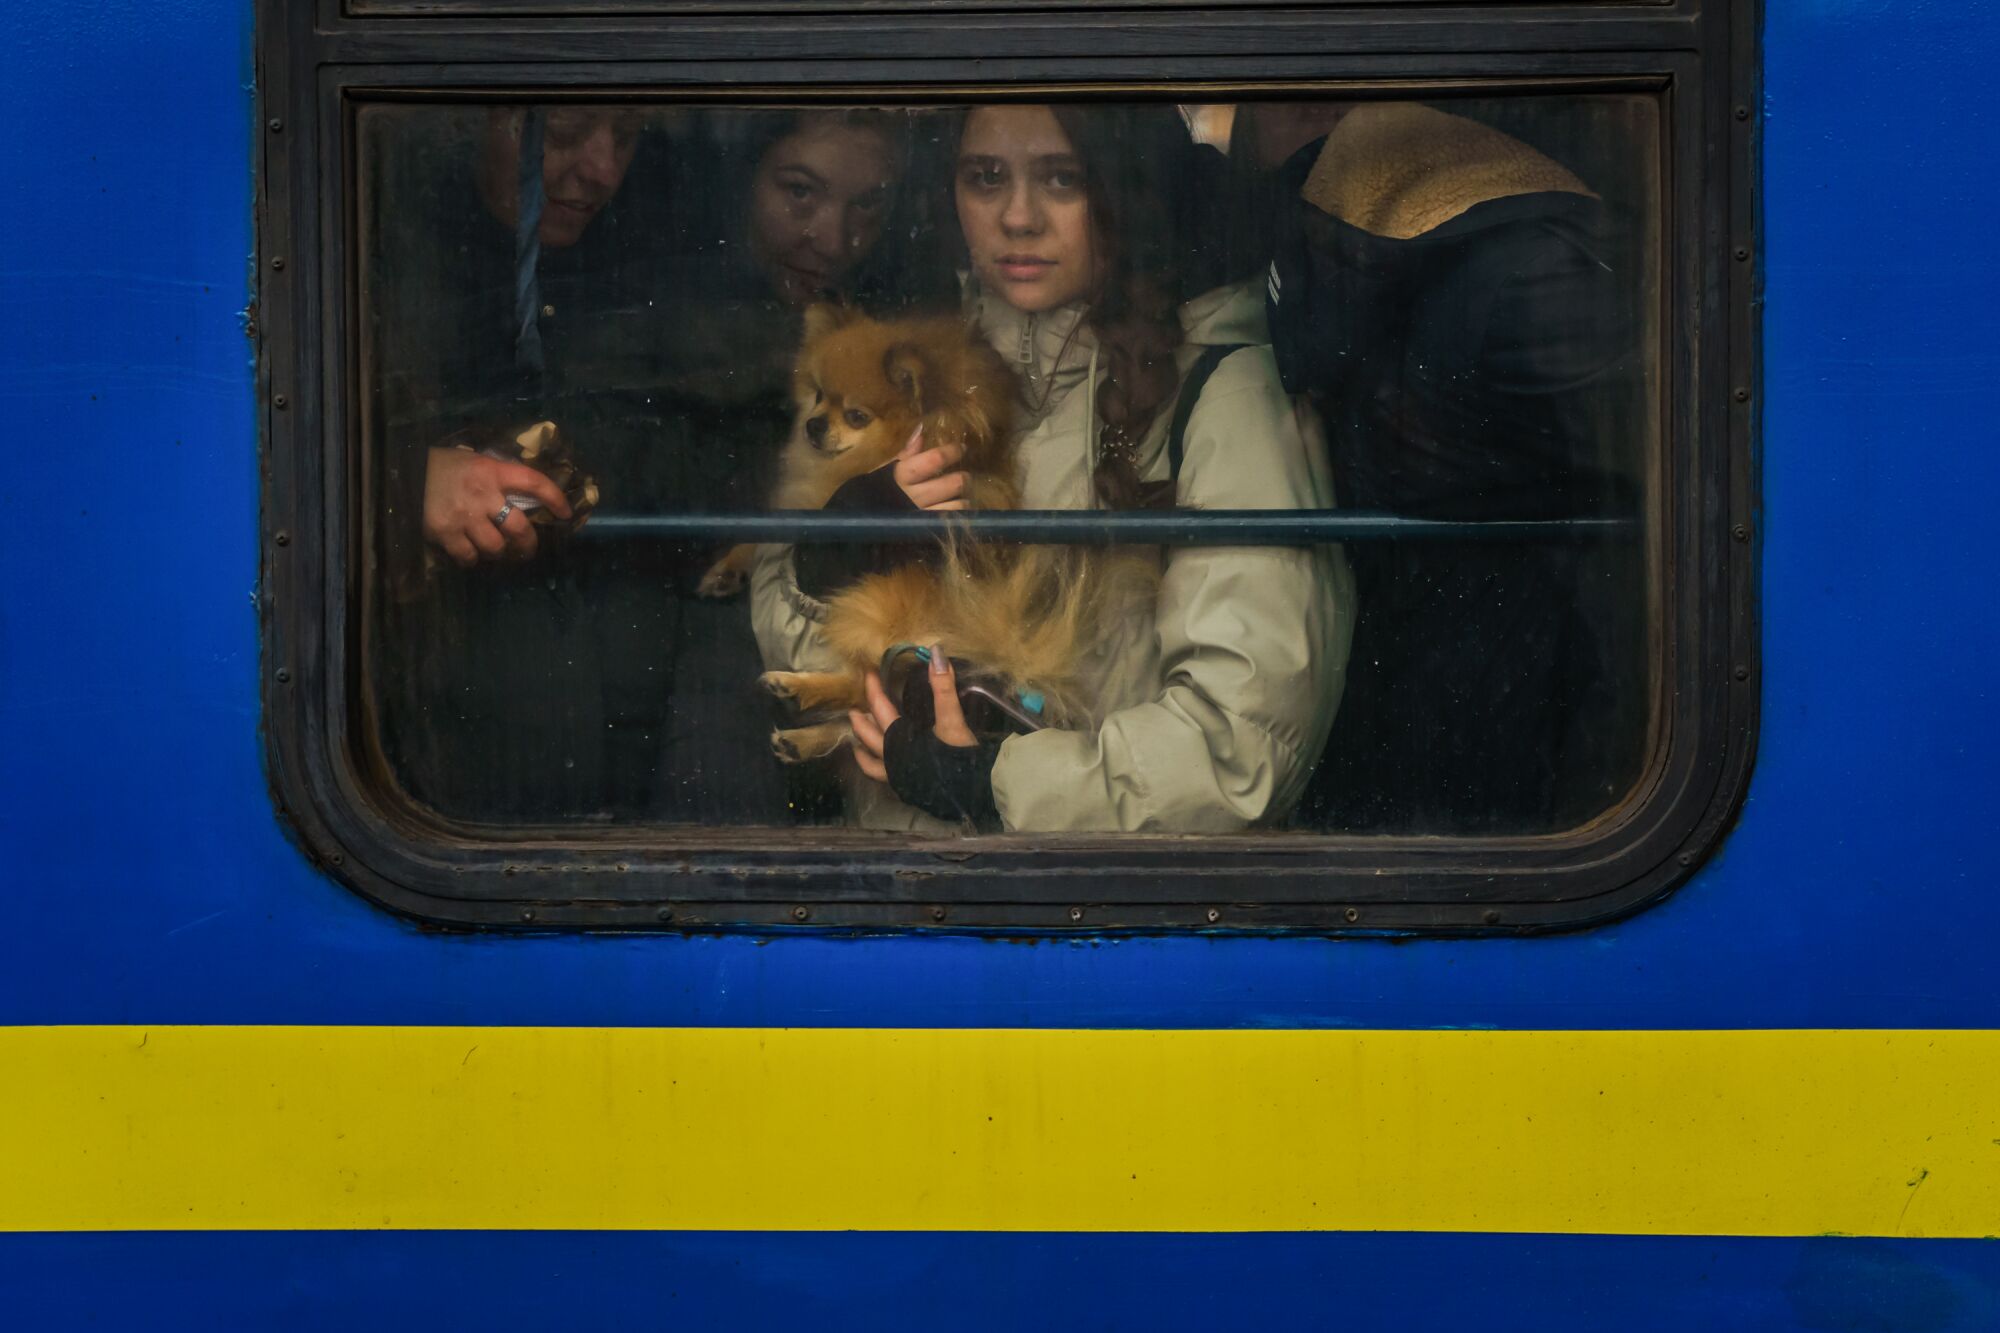 A train passenger holding a dog is seen through the car window